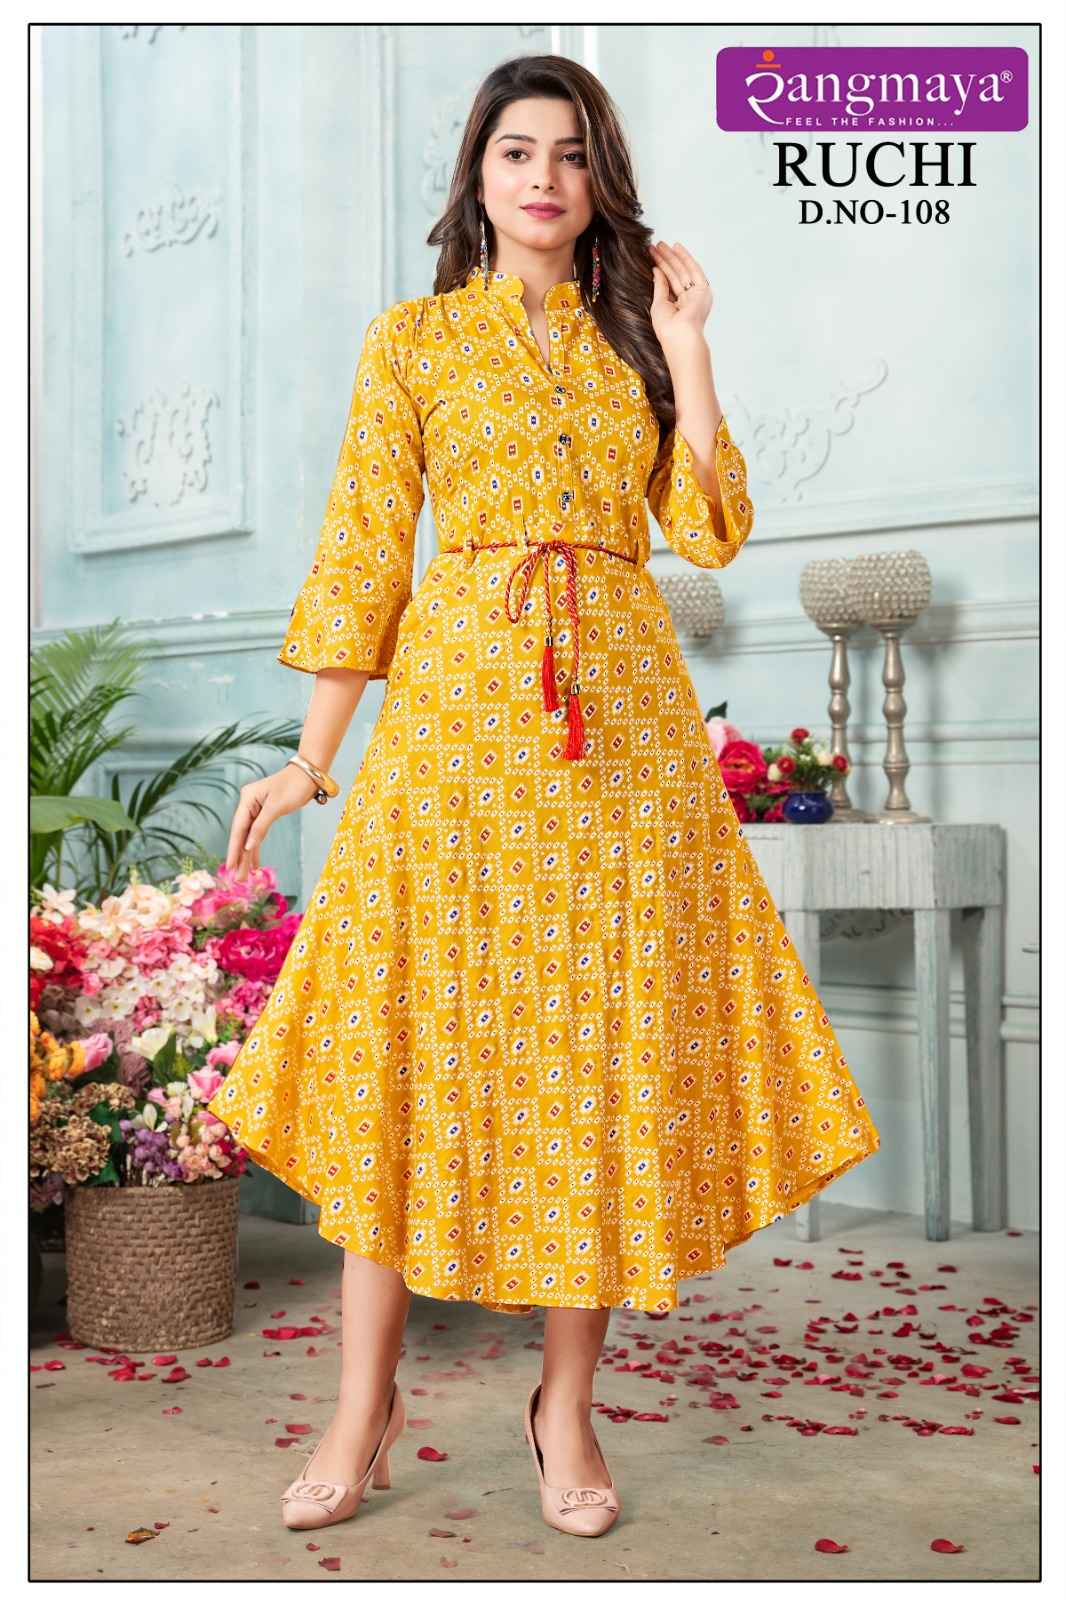 Rangmaya Ruchi Rayon Gowns 8 pcs Catalogue